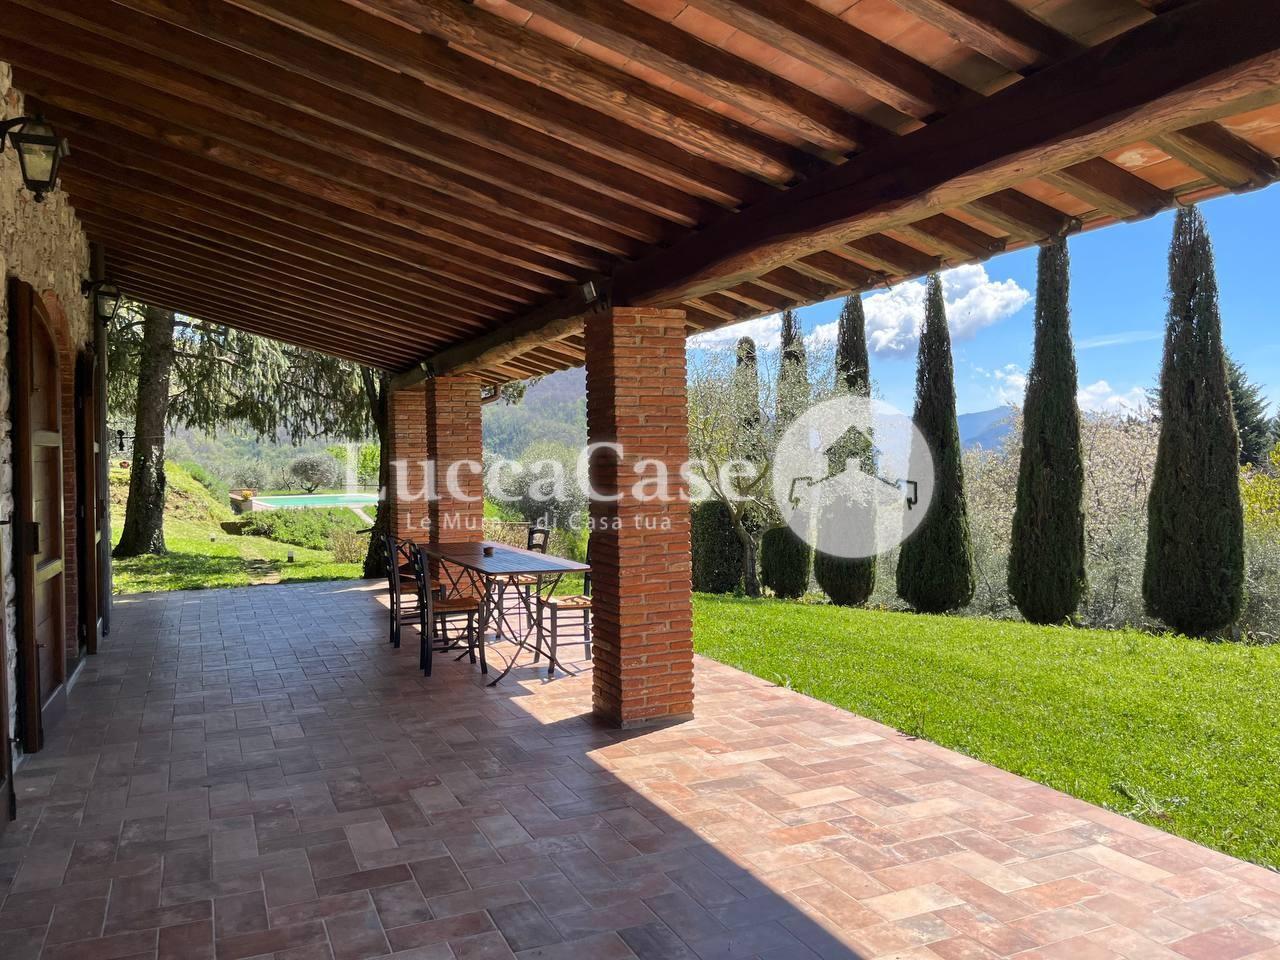 Country house for sale in Pescaglia (LU)